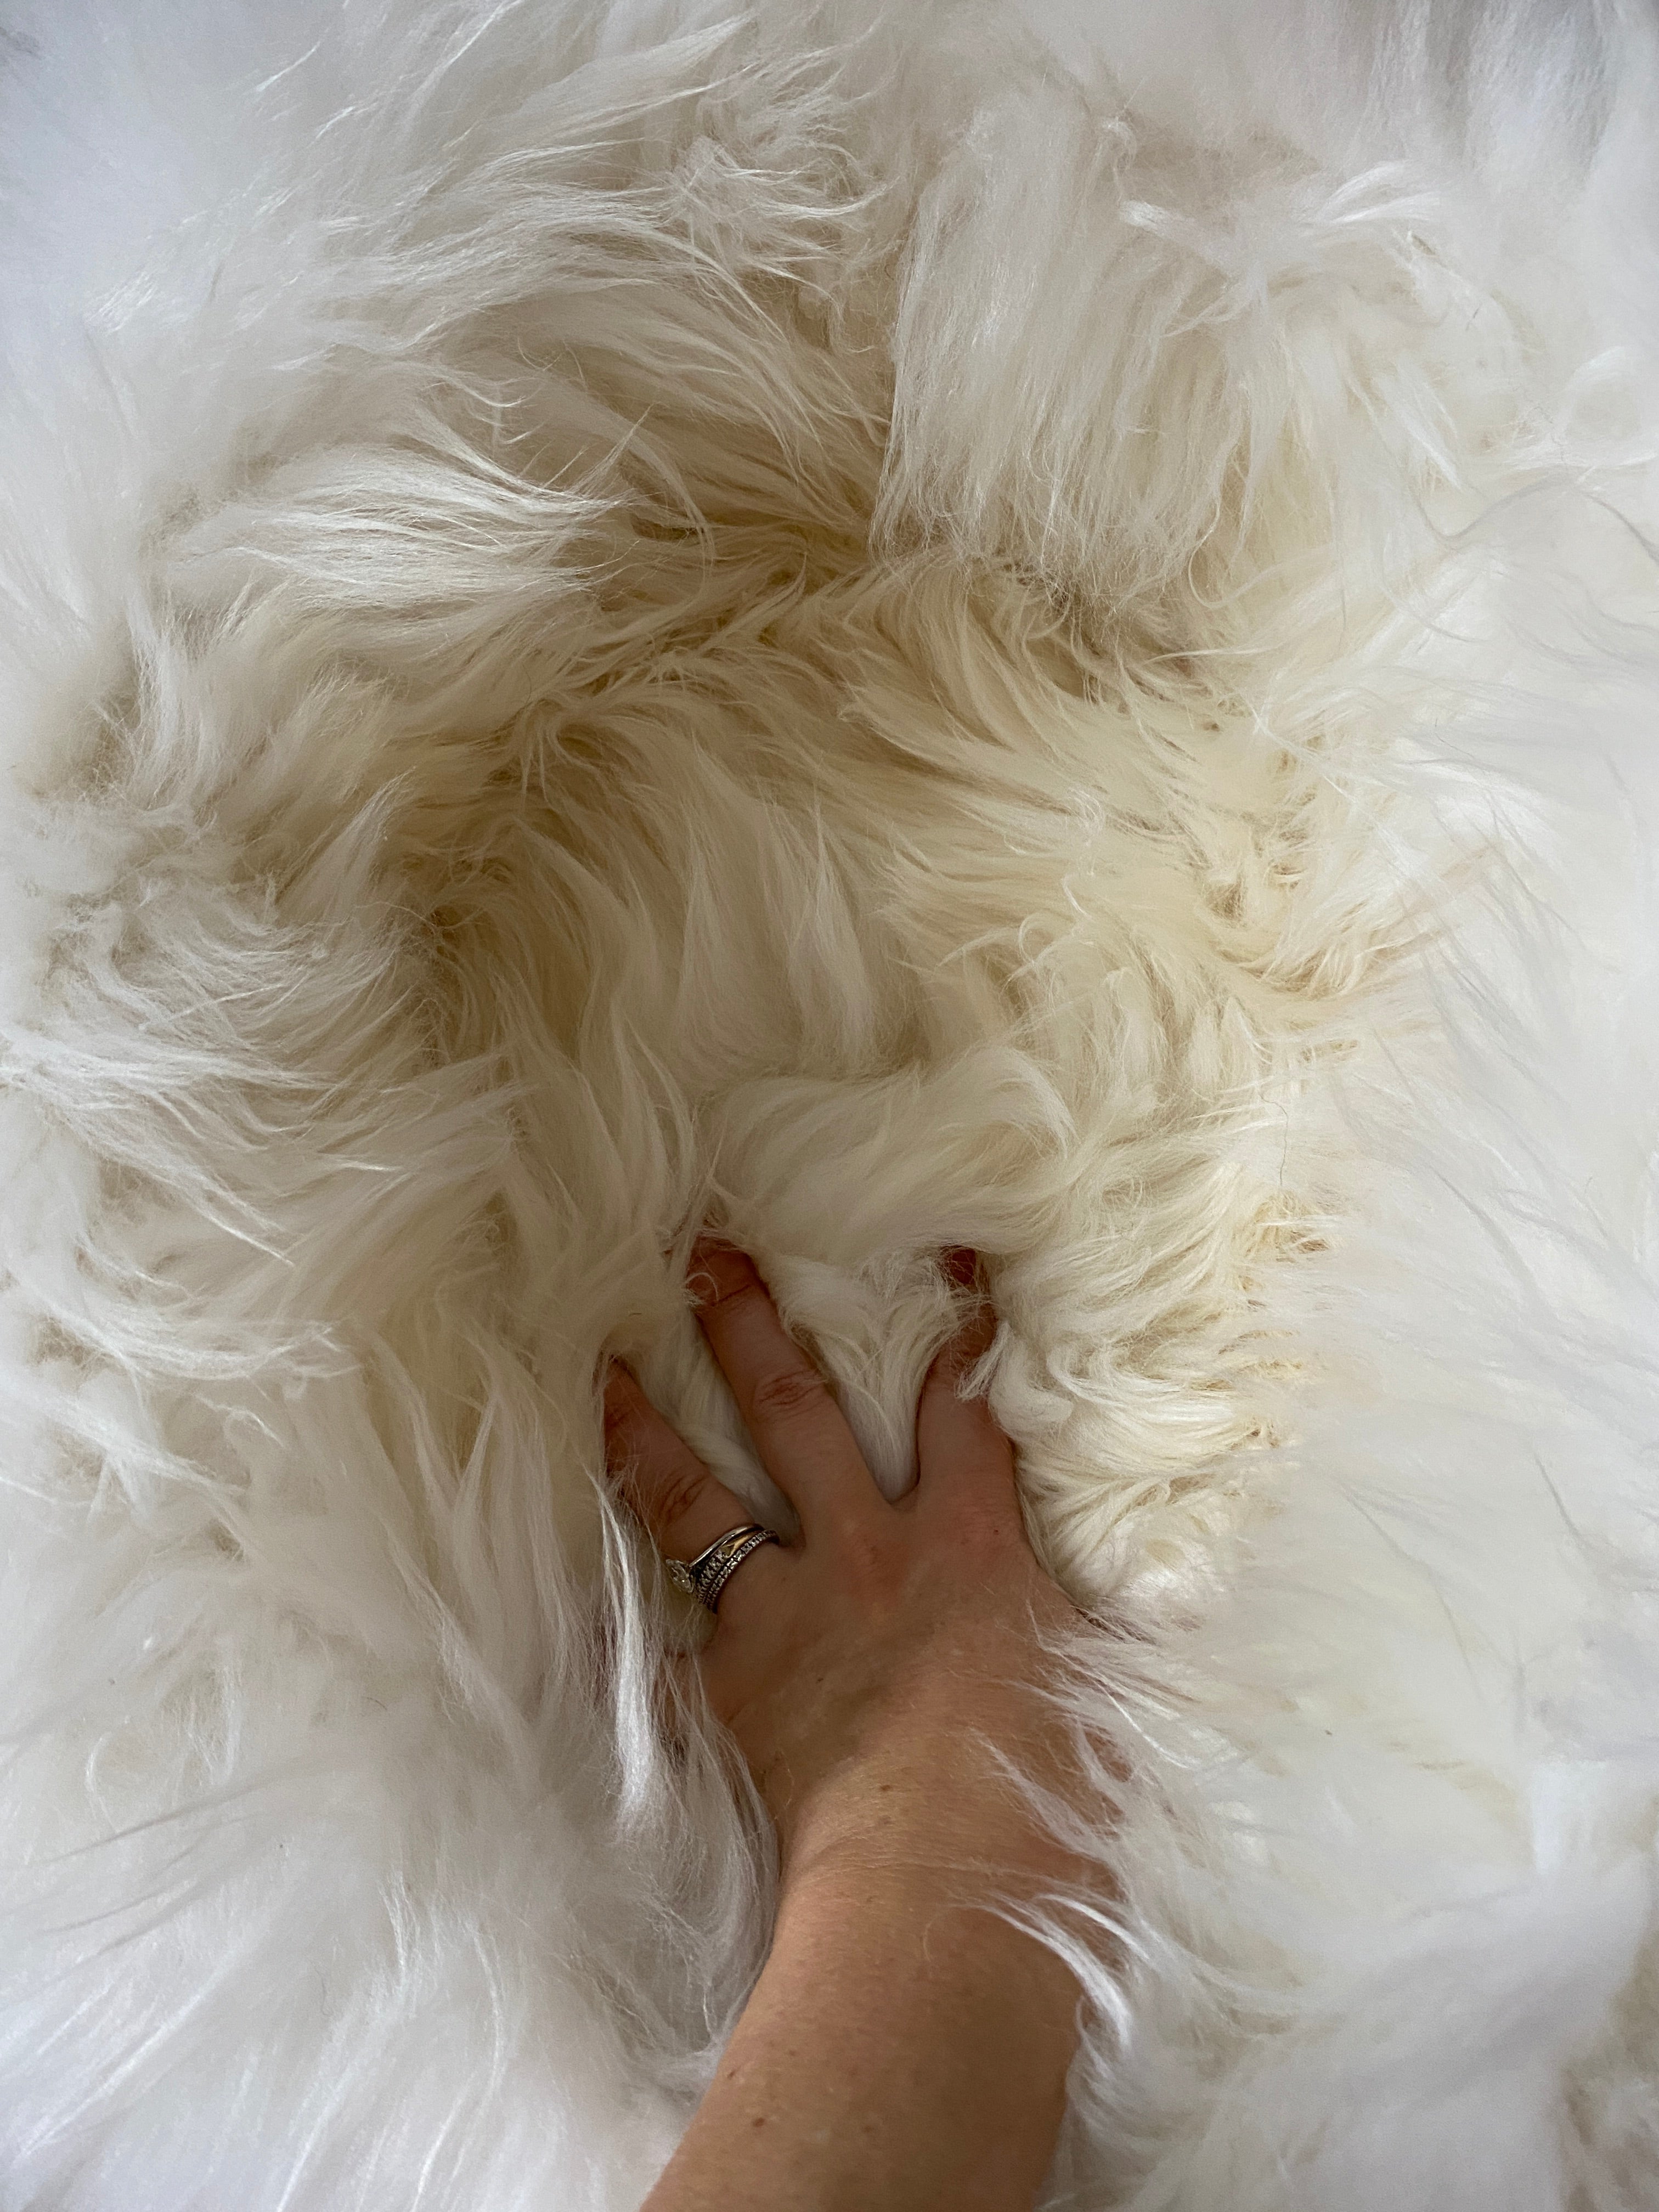 MEDIUM Plush Ivory Sheepskin Pet Bed